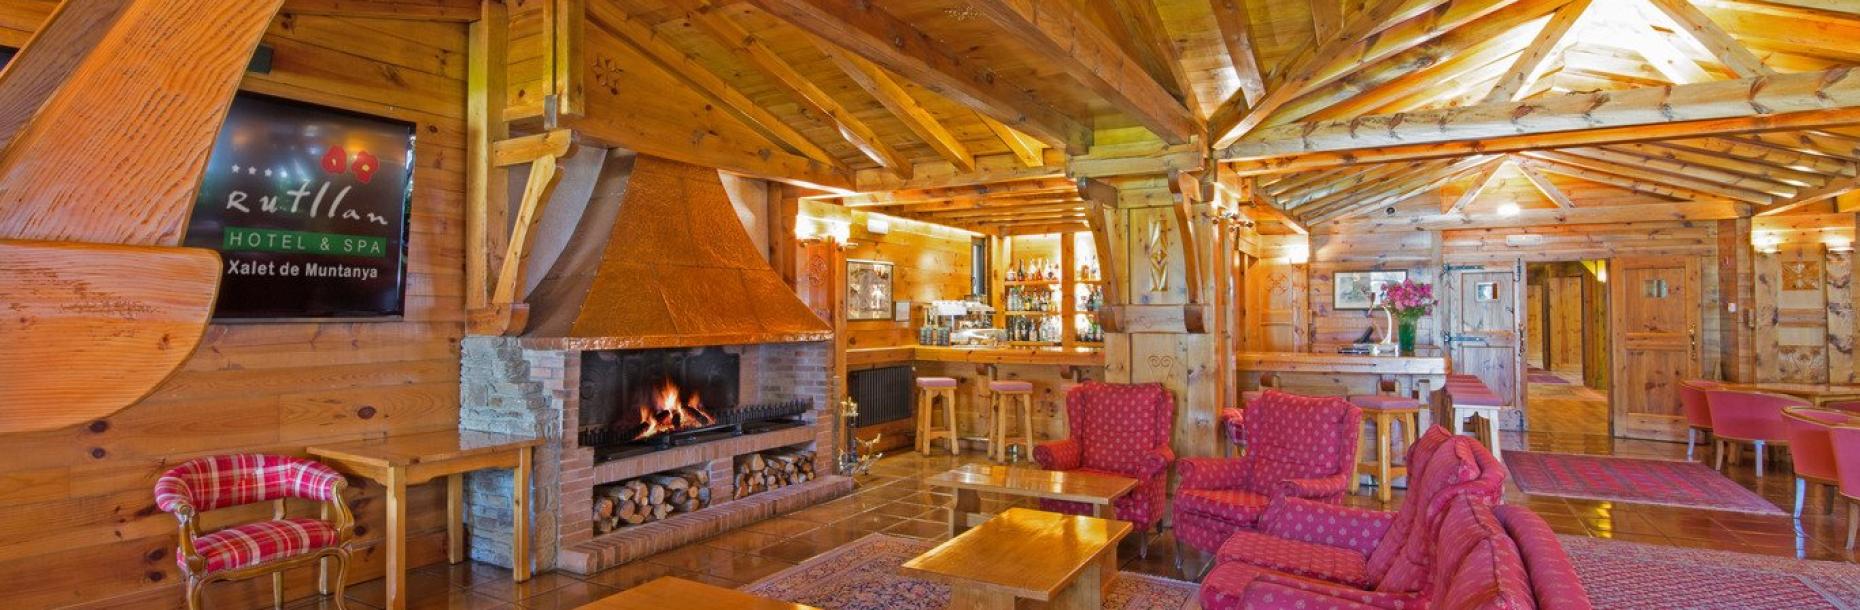 Hotel Rutllan, your mountain hotel in Andorra